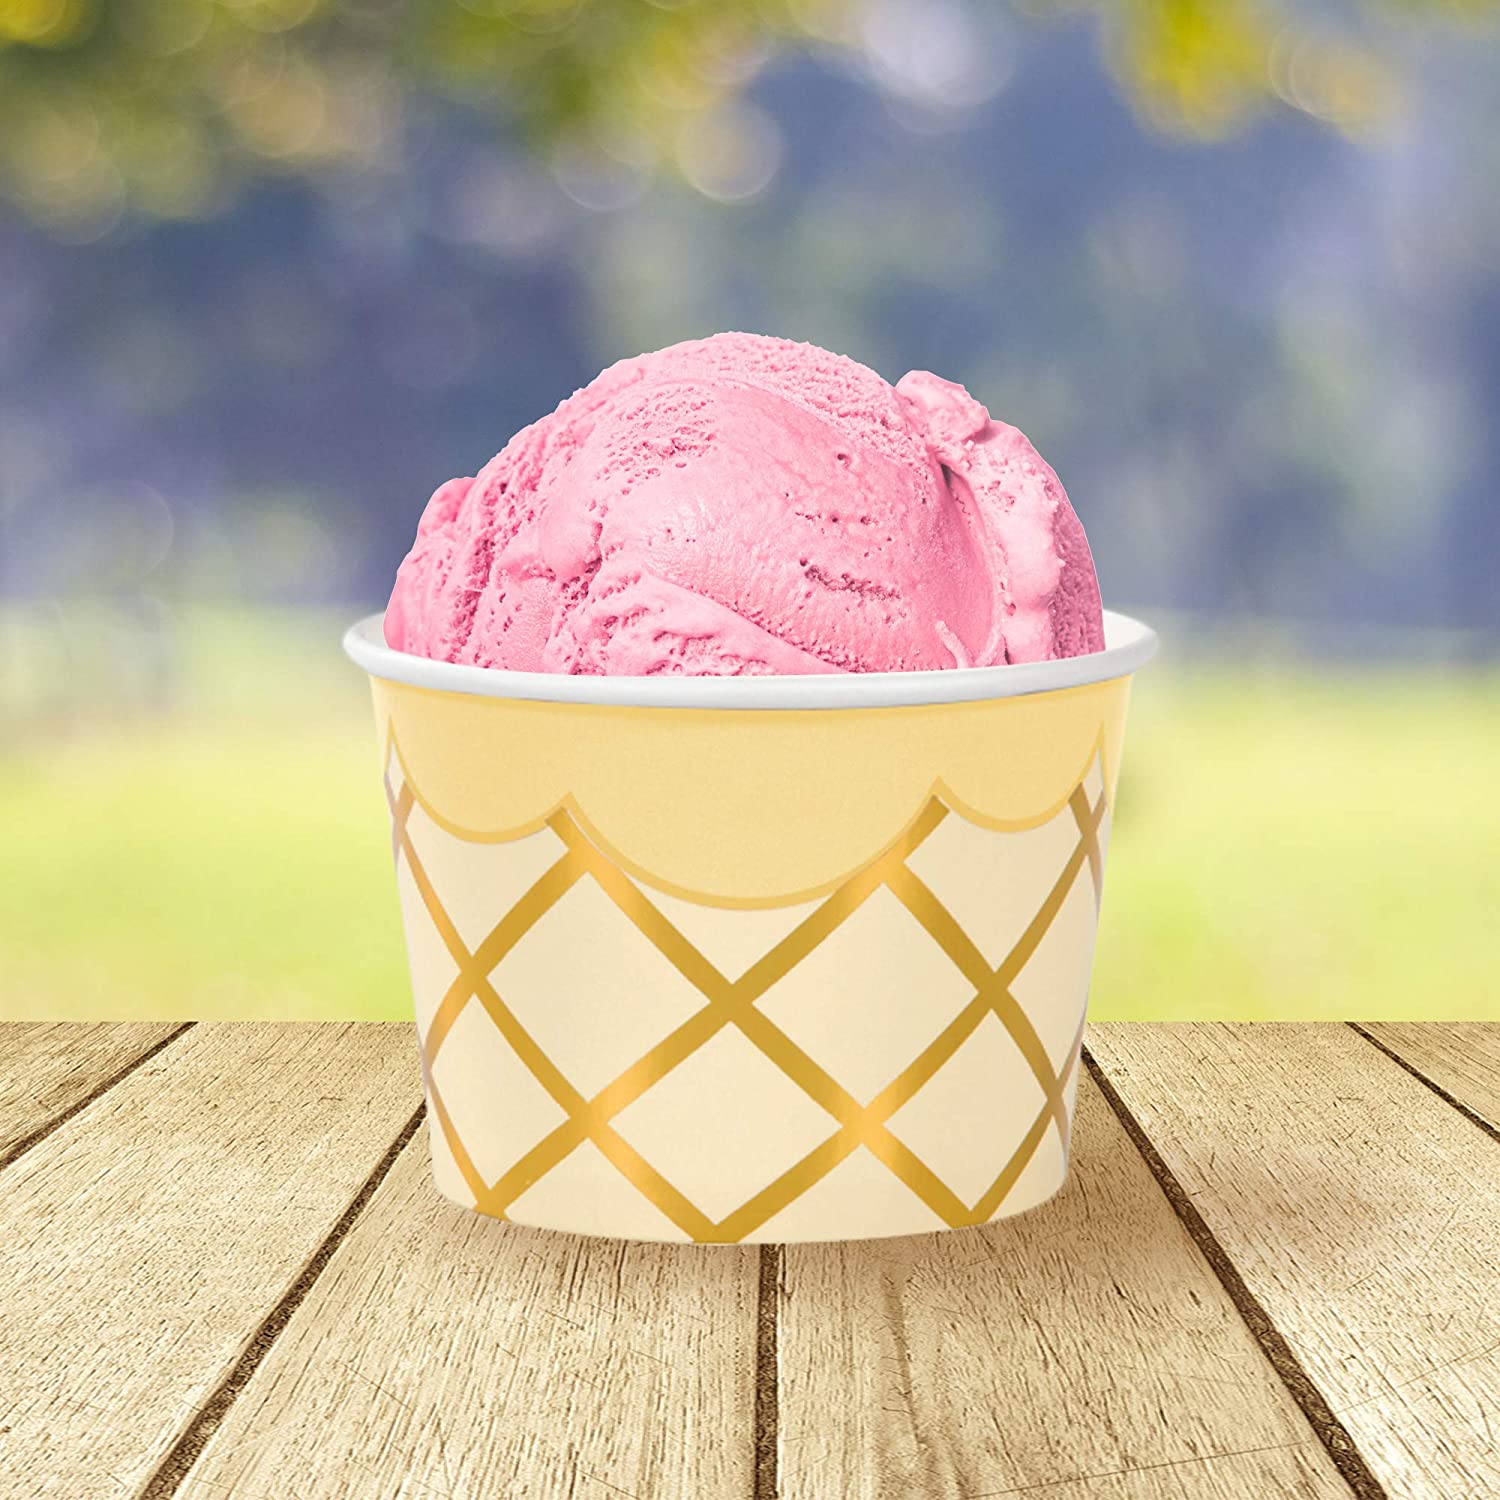 ice-cream-social-cups